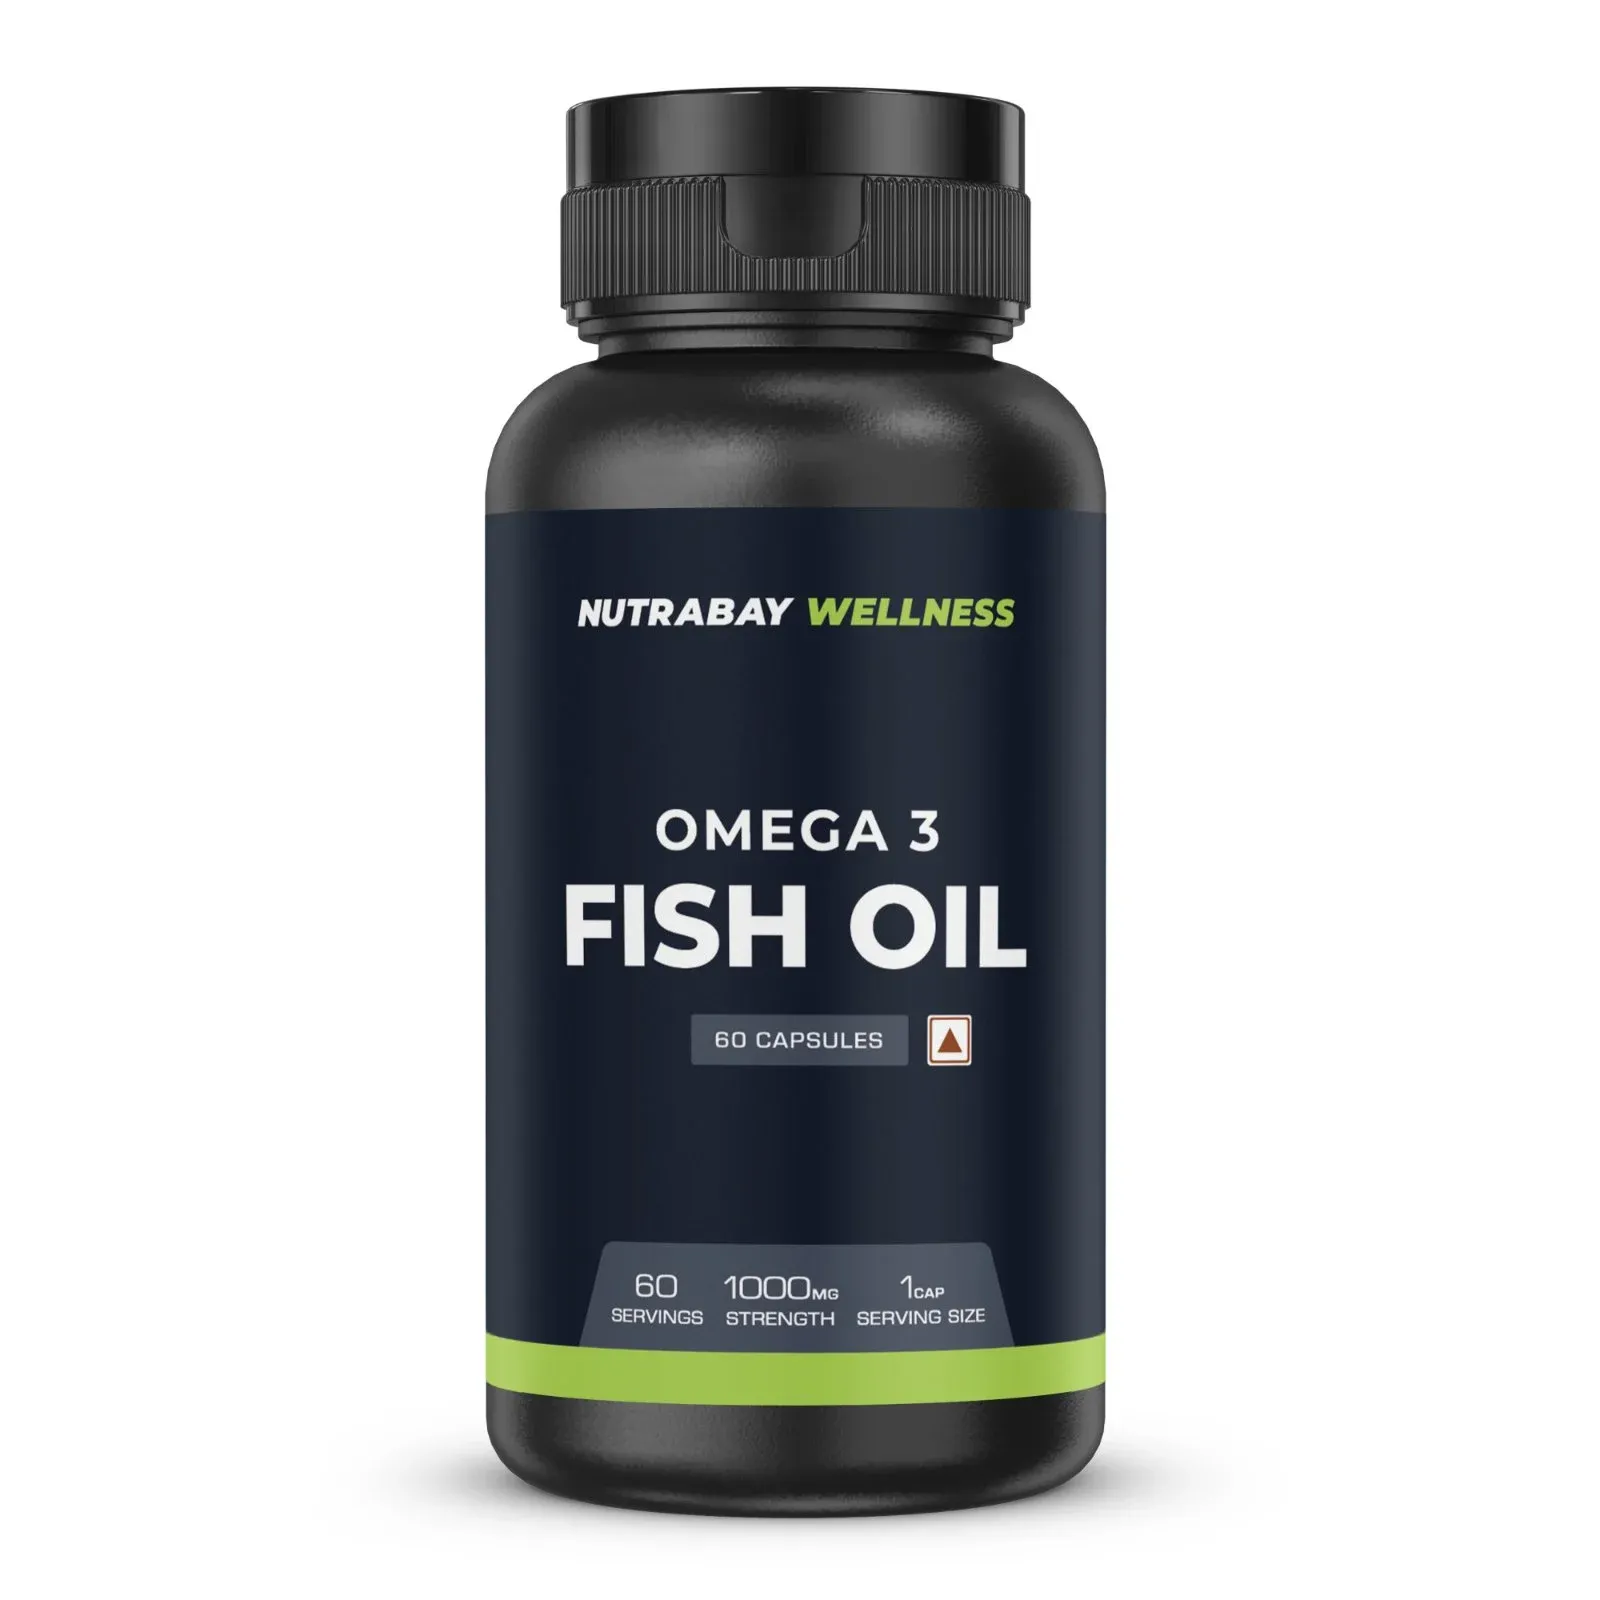 Nutrabay Wellness Fish Oil Omega 3 Image